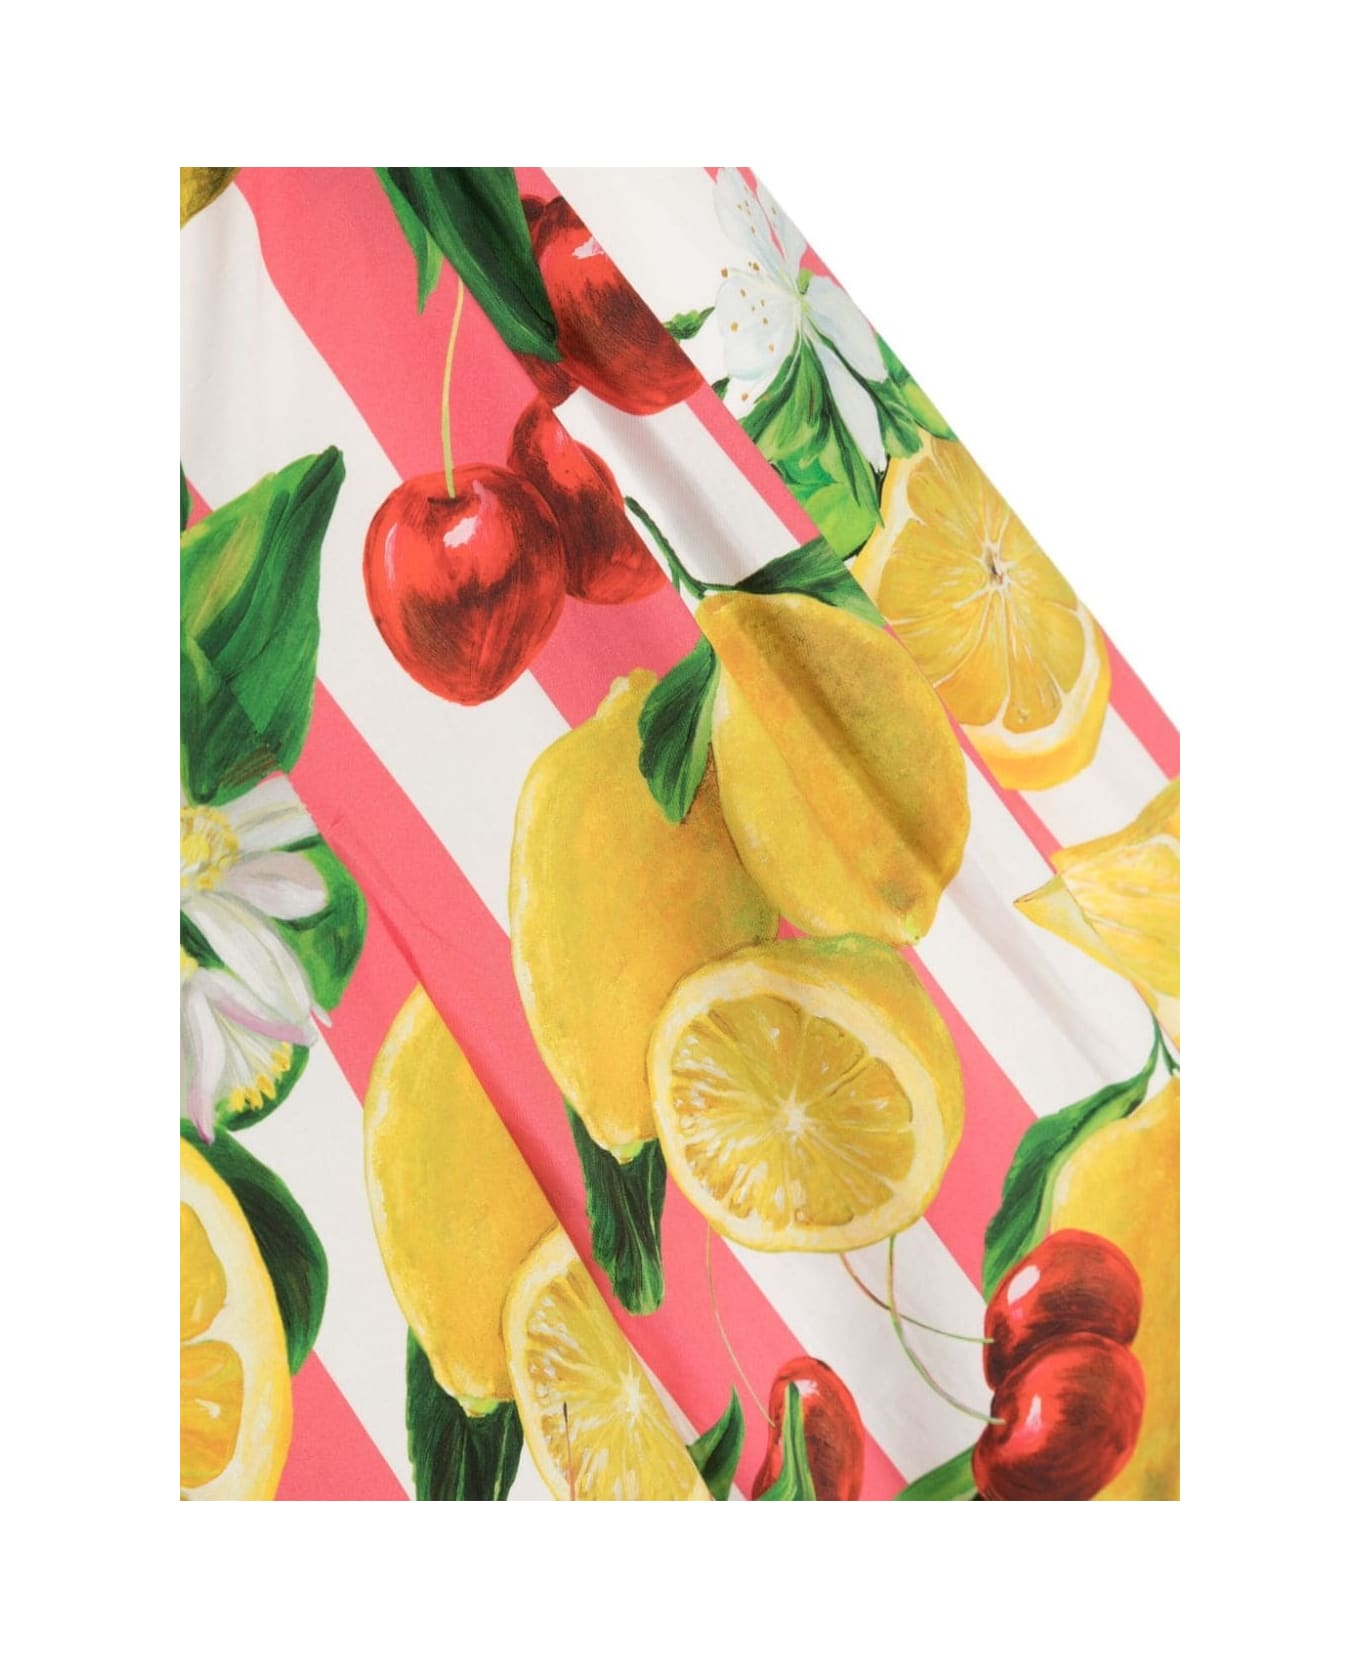 Dolce & Gabbana Poplin Trousers With Lemon And Cherry Print - Multicolour